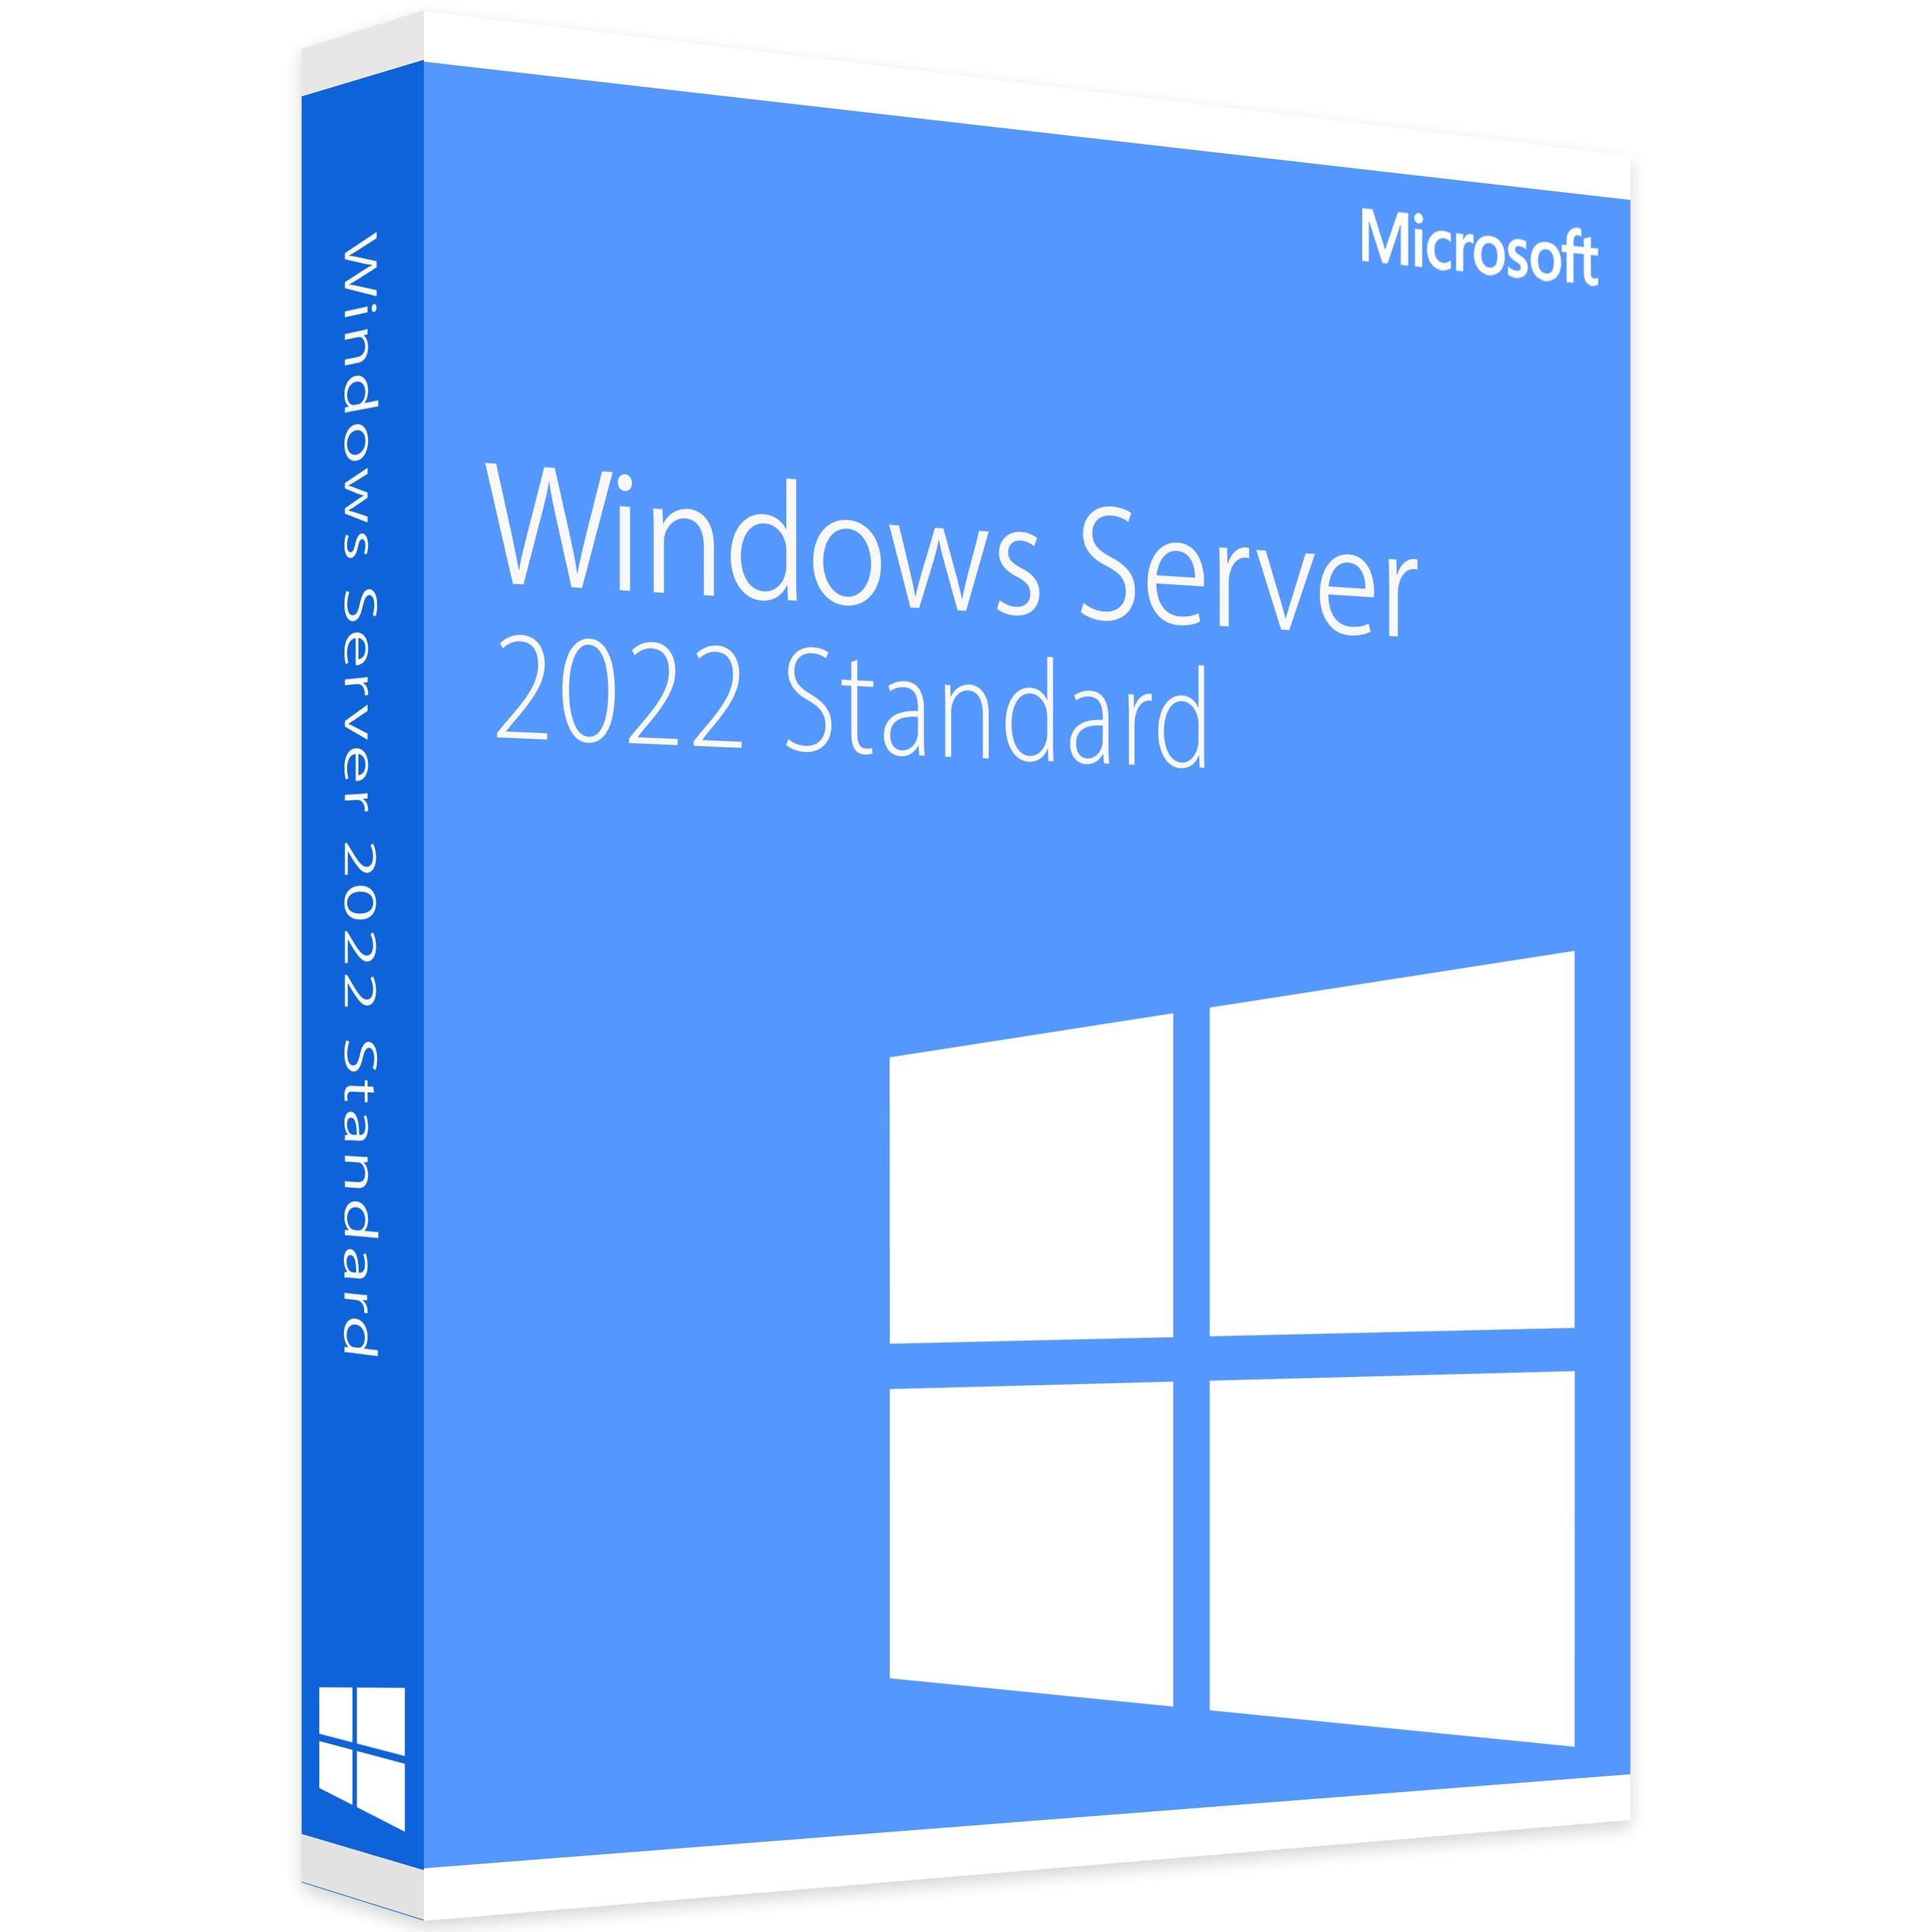 Microsoft Windows Server 2022 Standard - Lifetime license 1PC